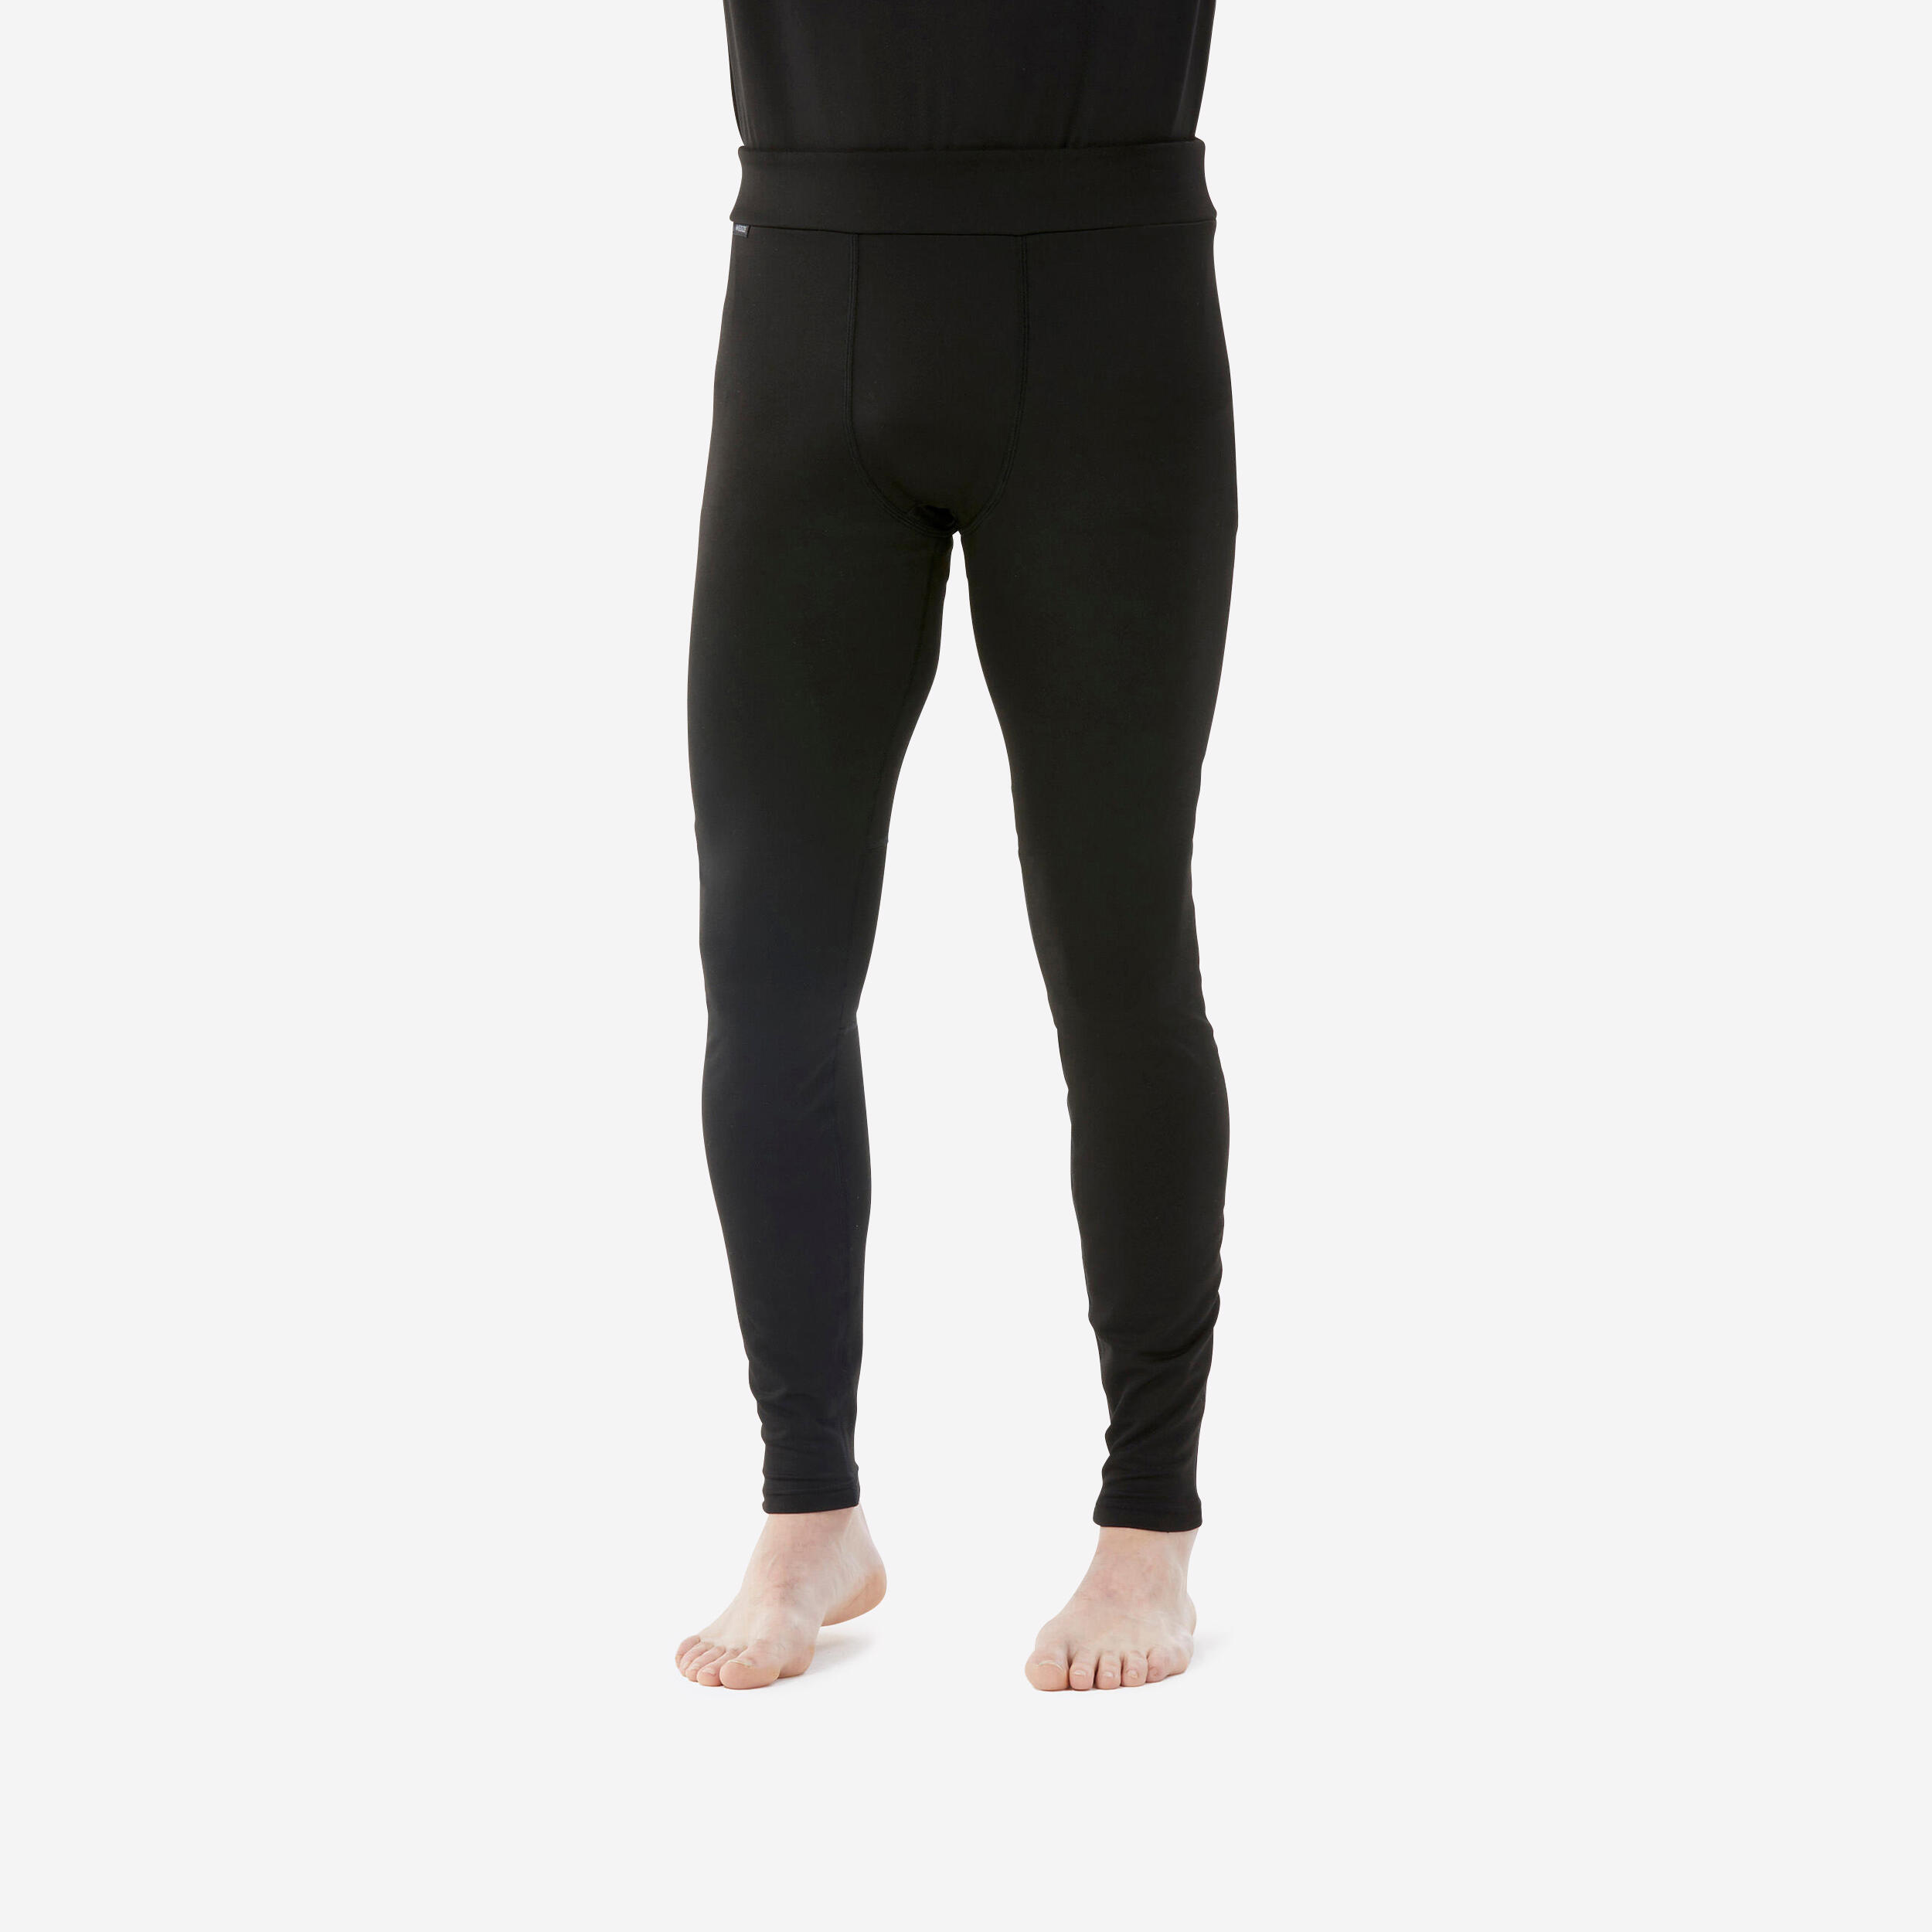 Decathlon Football Thermal Shorts Underwear - Black - Men - Keepdry 500  Kipsta - Trendyol